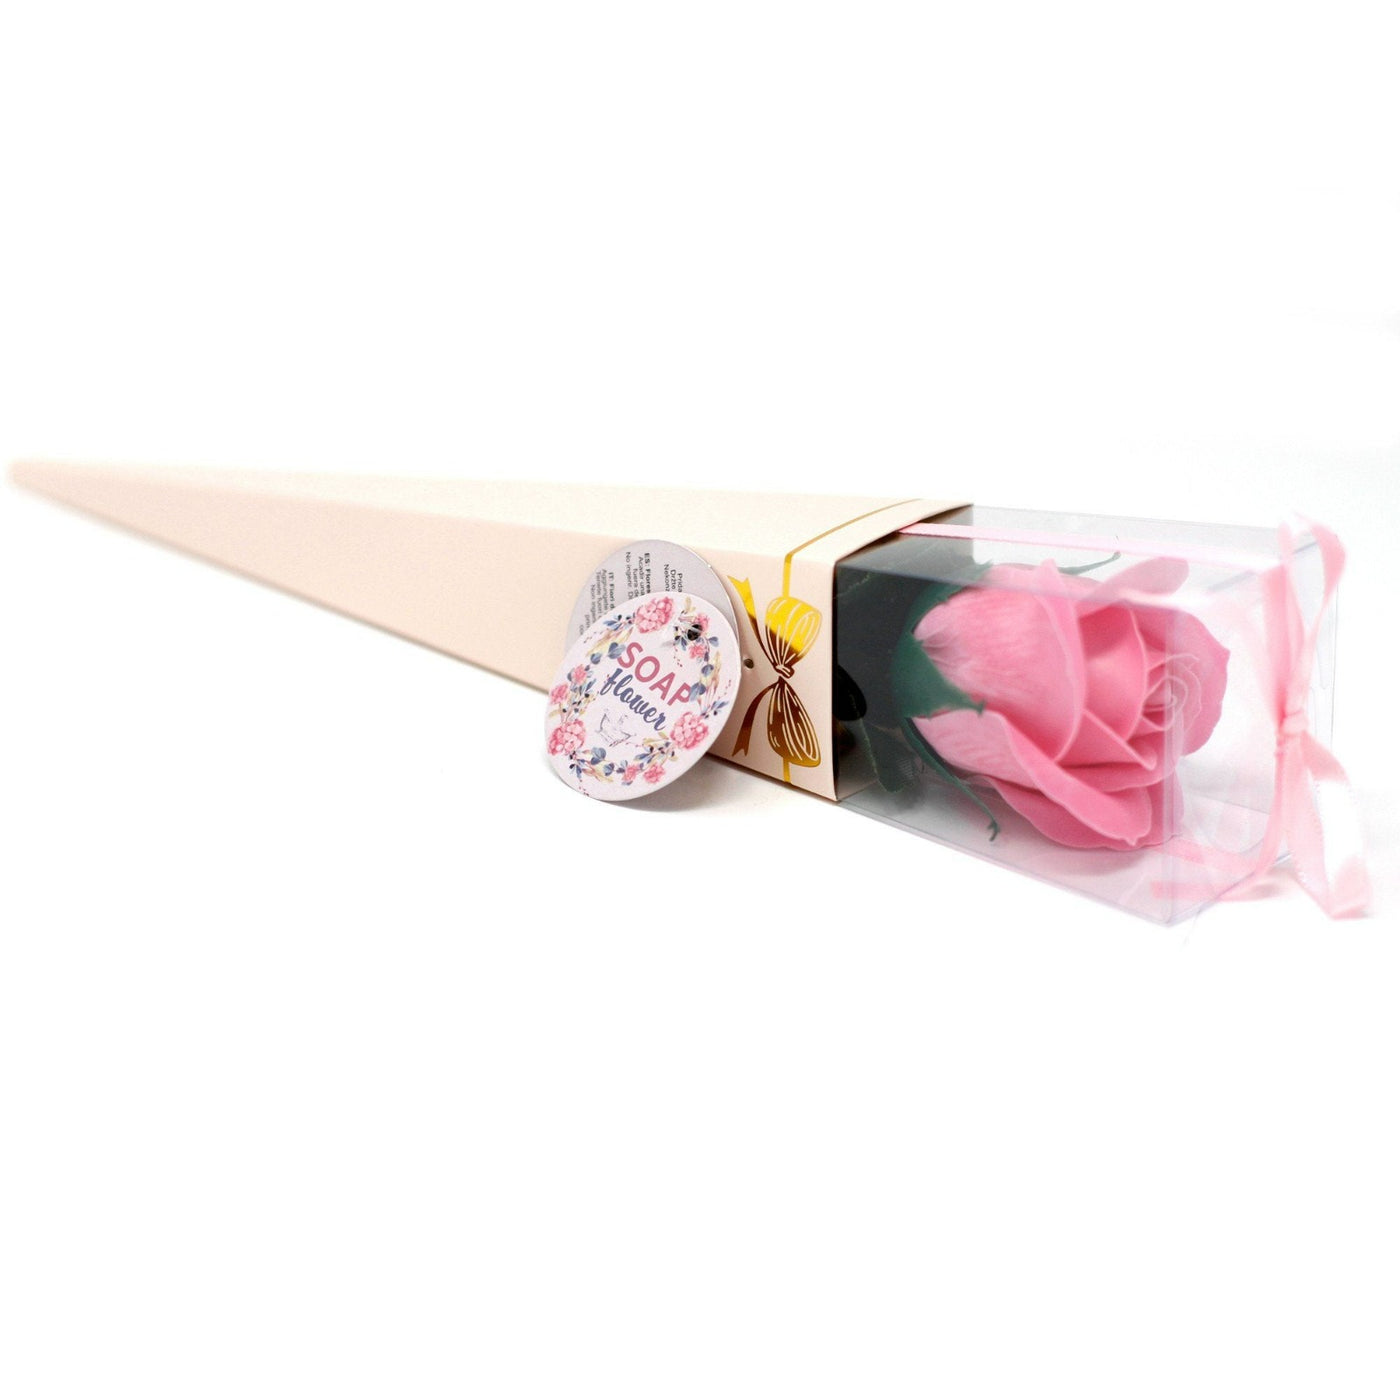 Luxury Soap Flower Medium Rose Romantic Gift.